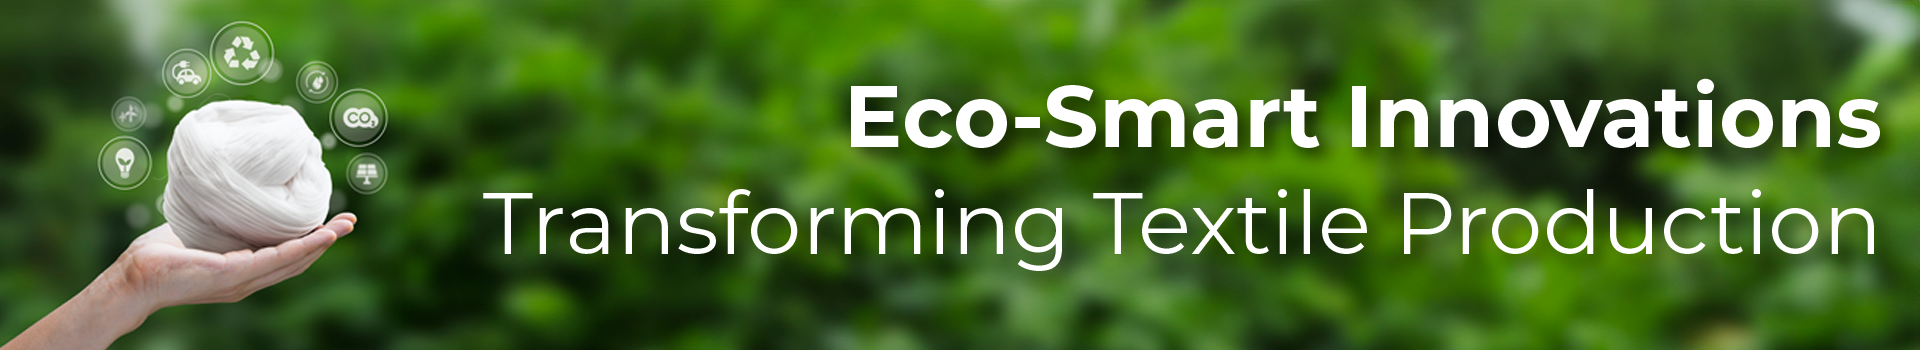 Eco-Smart Innovations